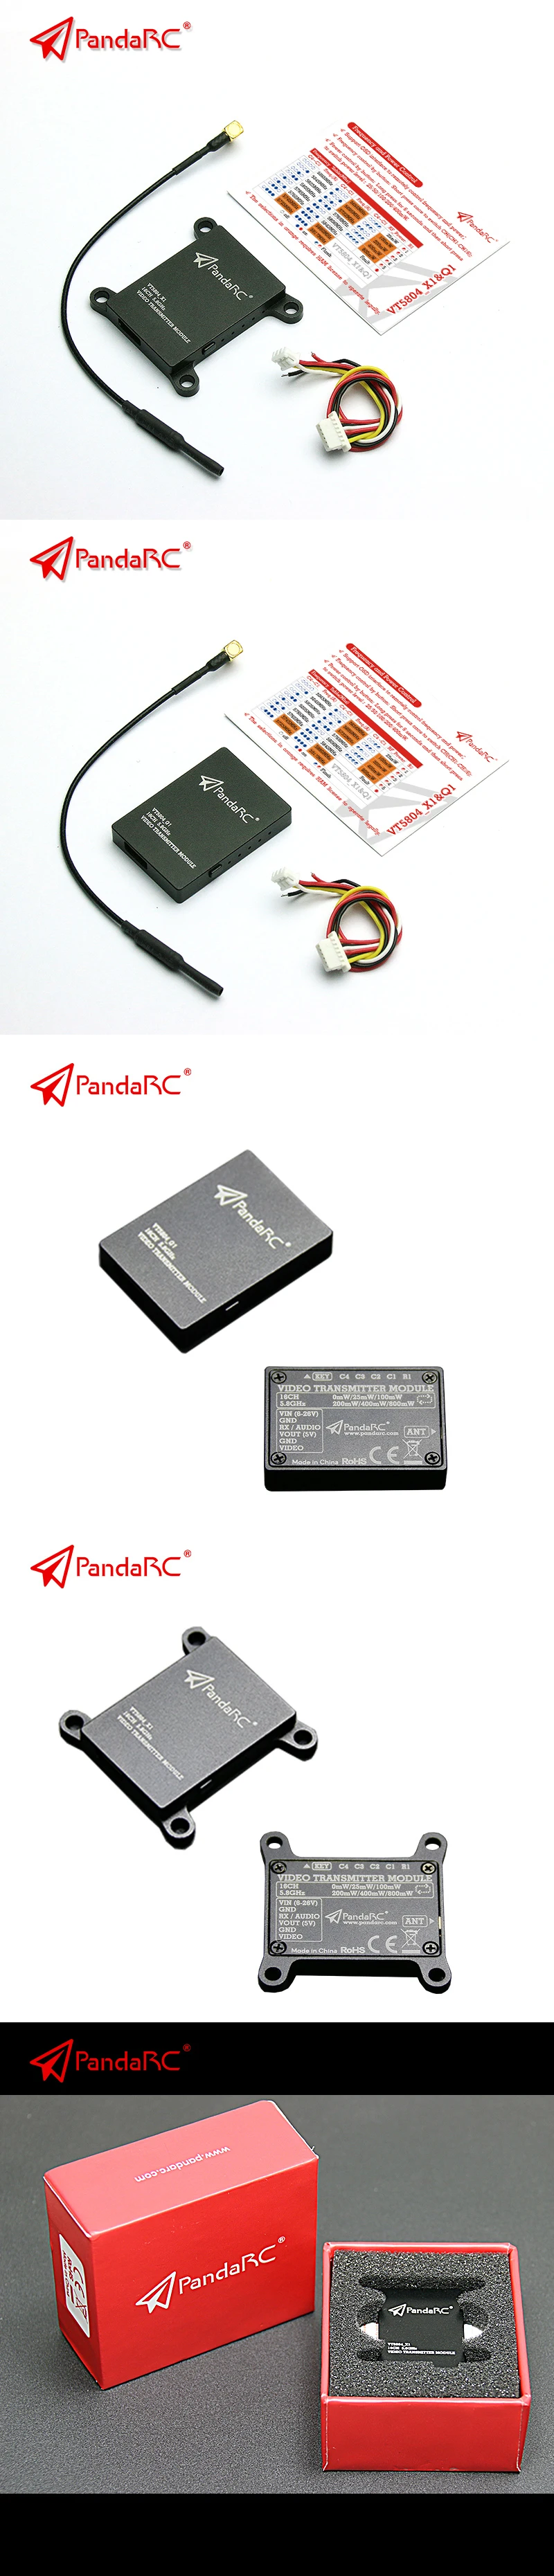 PandaRC VT5801 V2 VT5805 VT5804 FPV видео передатчик 5,8G 48CH 25/100/200/400/600 мВт переключаемый OSD Регулируемый SMA MMCX VTX